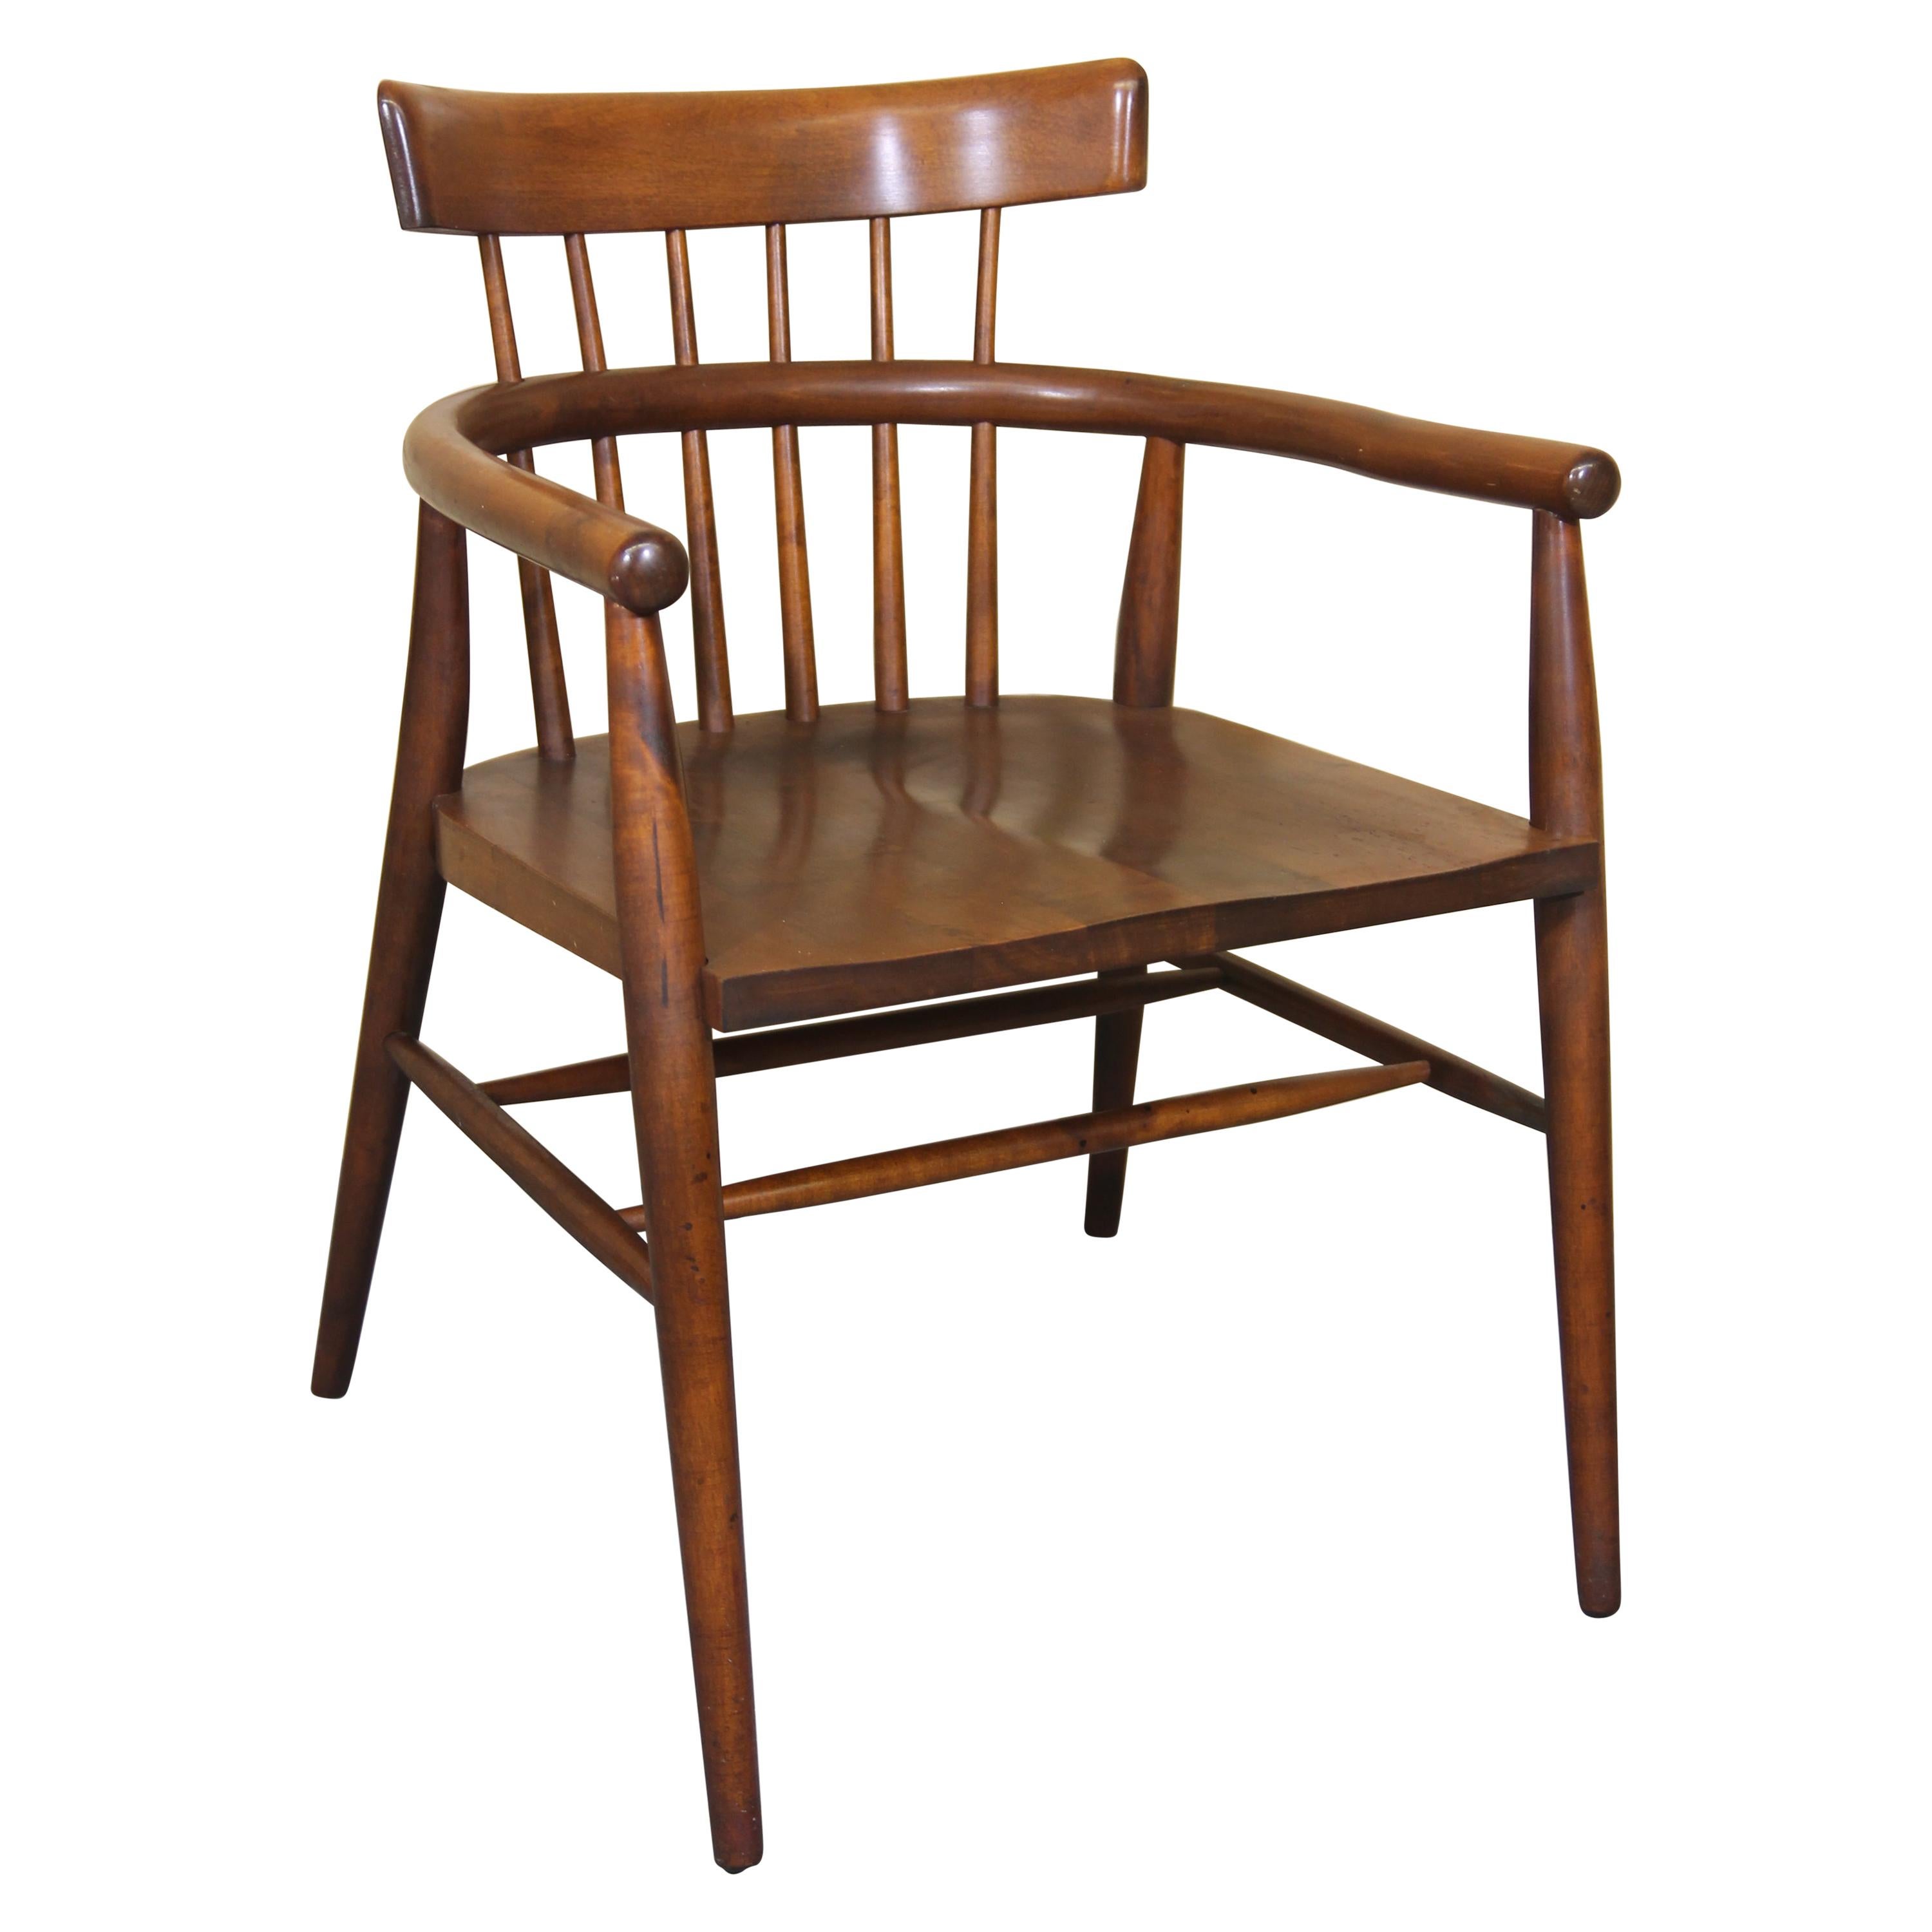 Paul McCobb Modernist Maple Armchair Designed in the 1950s For Sale